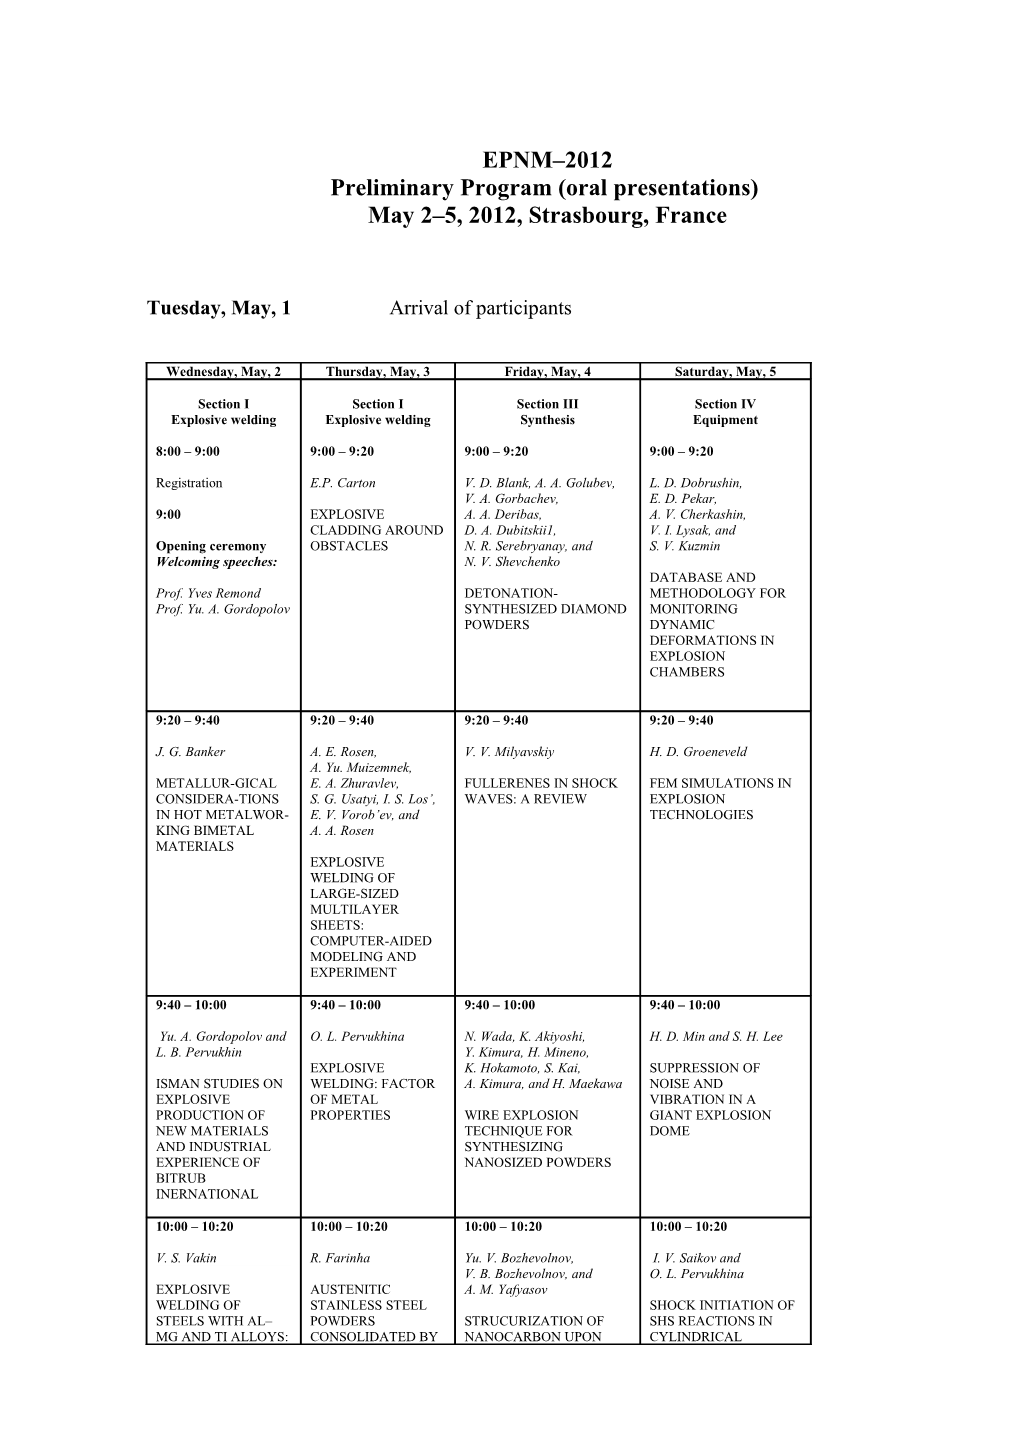 Preliminary Program (Oral Presentations)